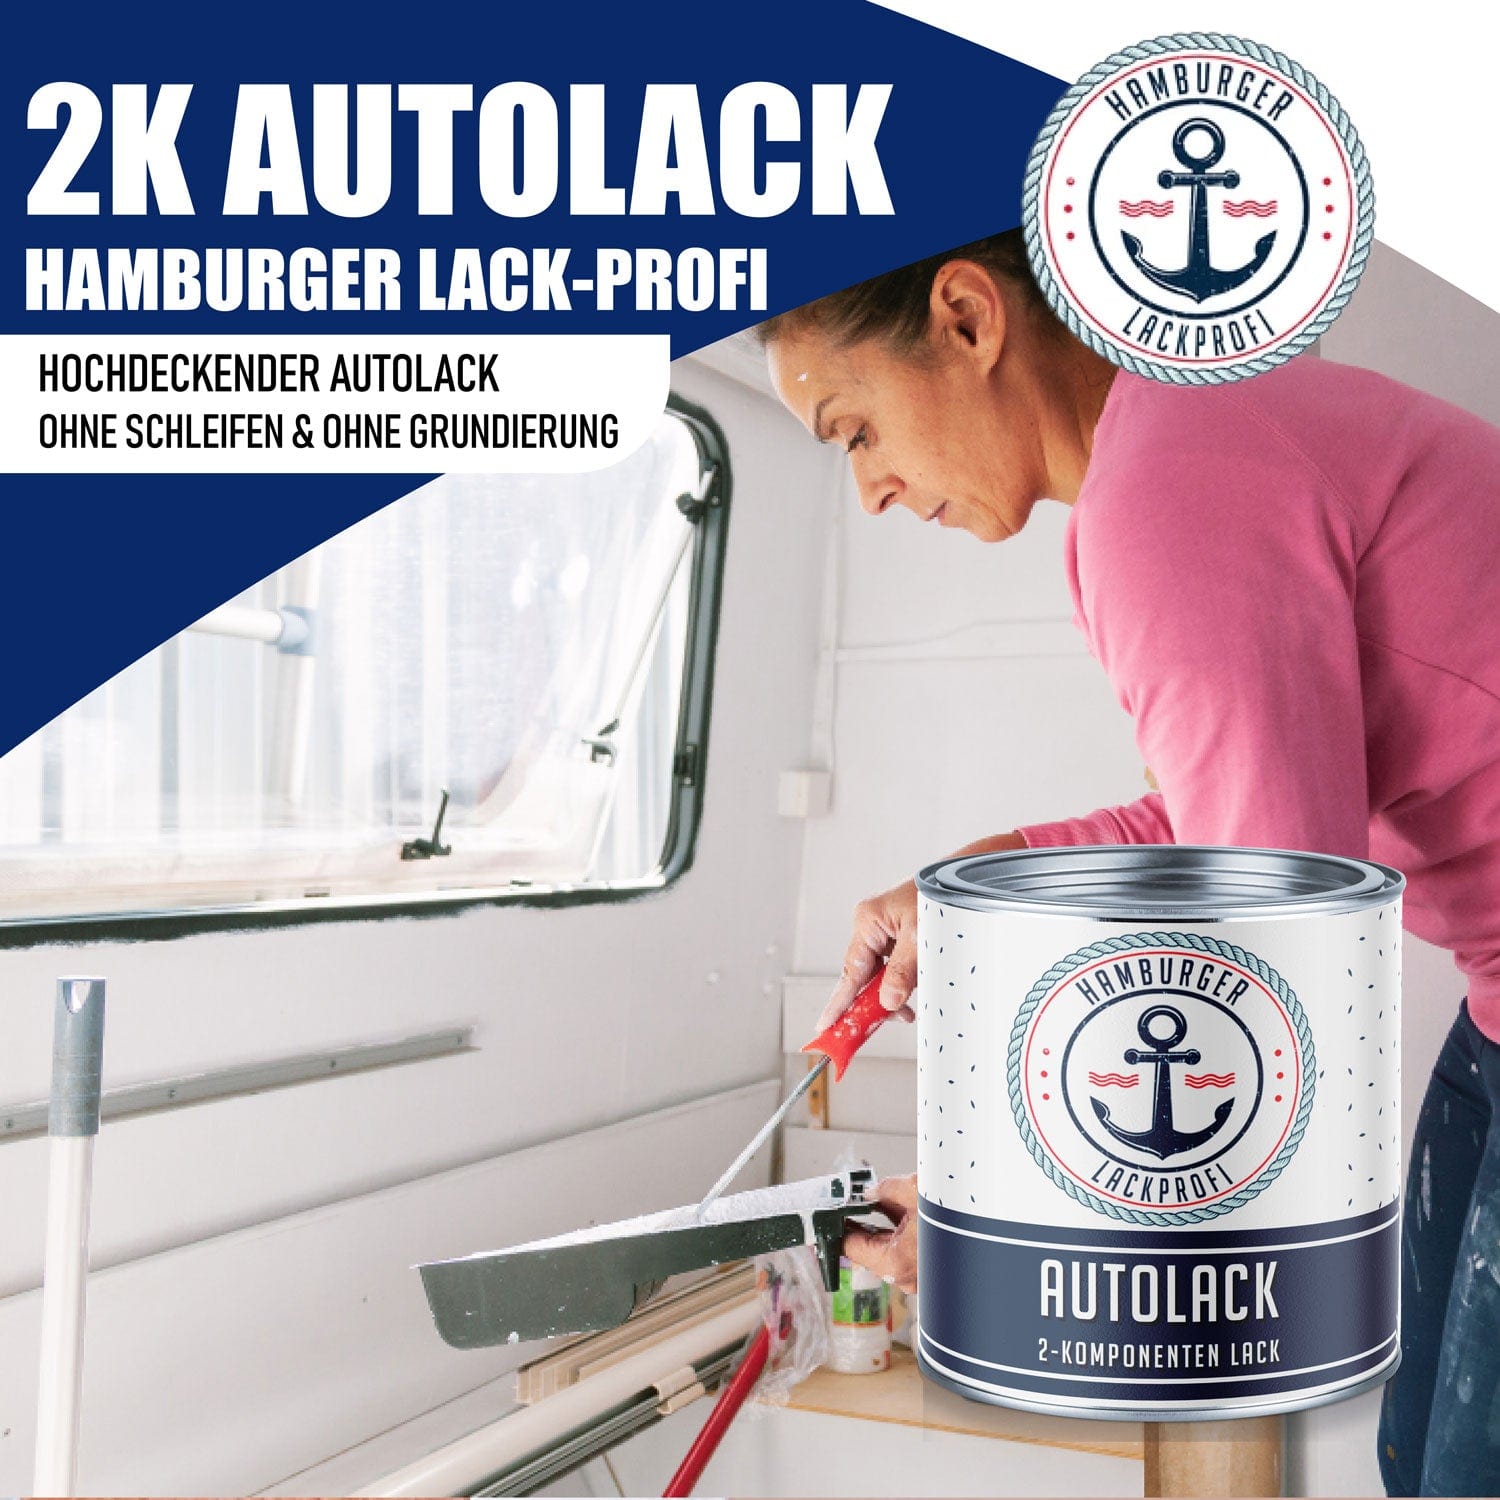 Hamburger Lack-Profi Lacke & Beschichtungen Hamburger Lack-Profi 2K Autolack in Smaragdgrün RAL 6001 mit Lackierset (X300) & Verdünnung (1 L) - 30% Sparangebot